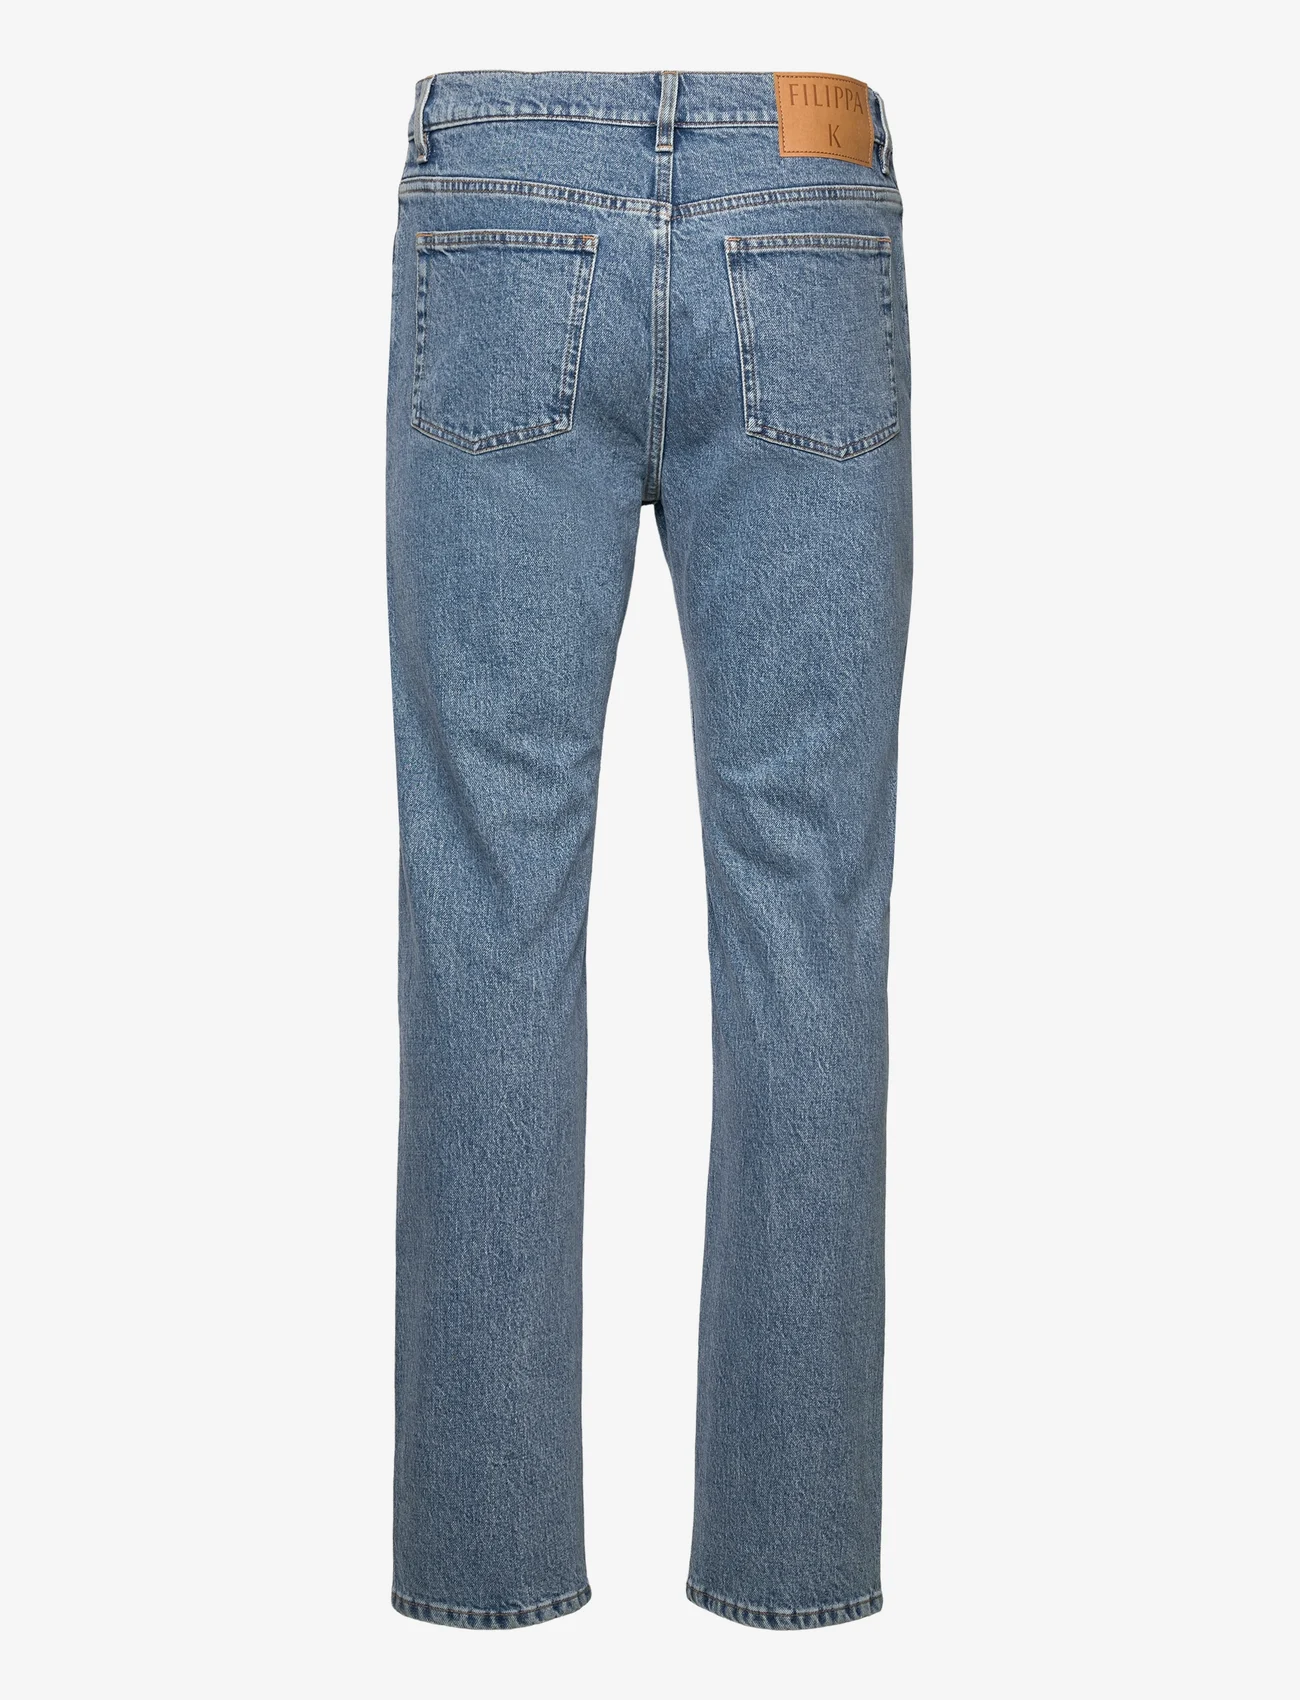 Filippa K - Classic Straight Jeans - allover st - 1